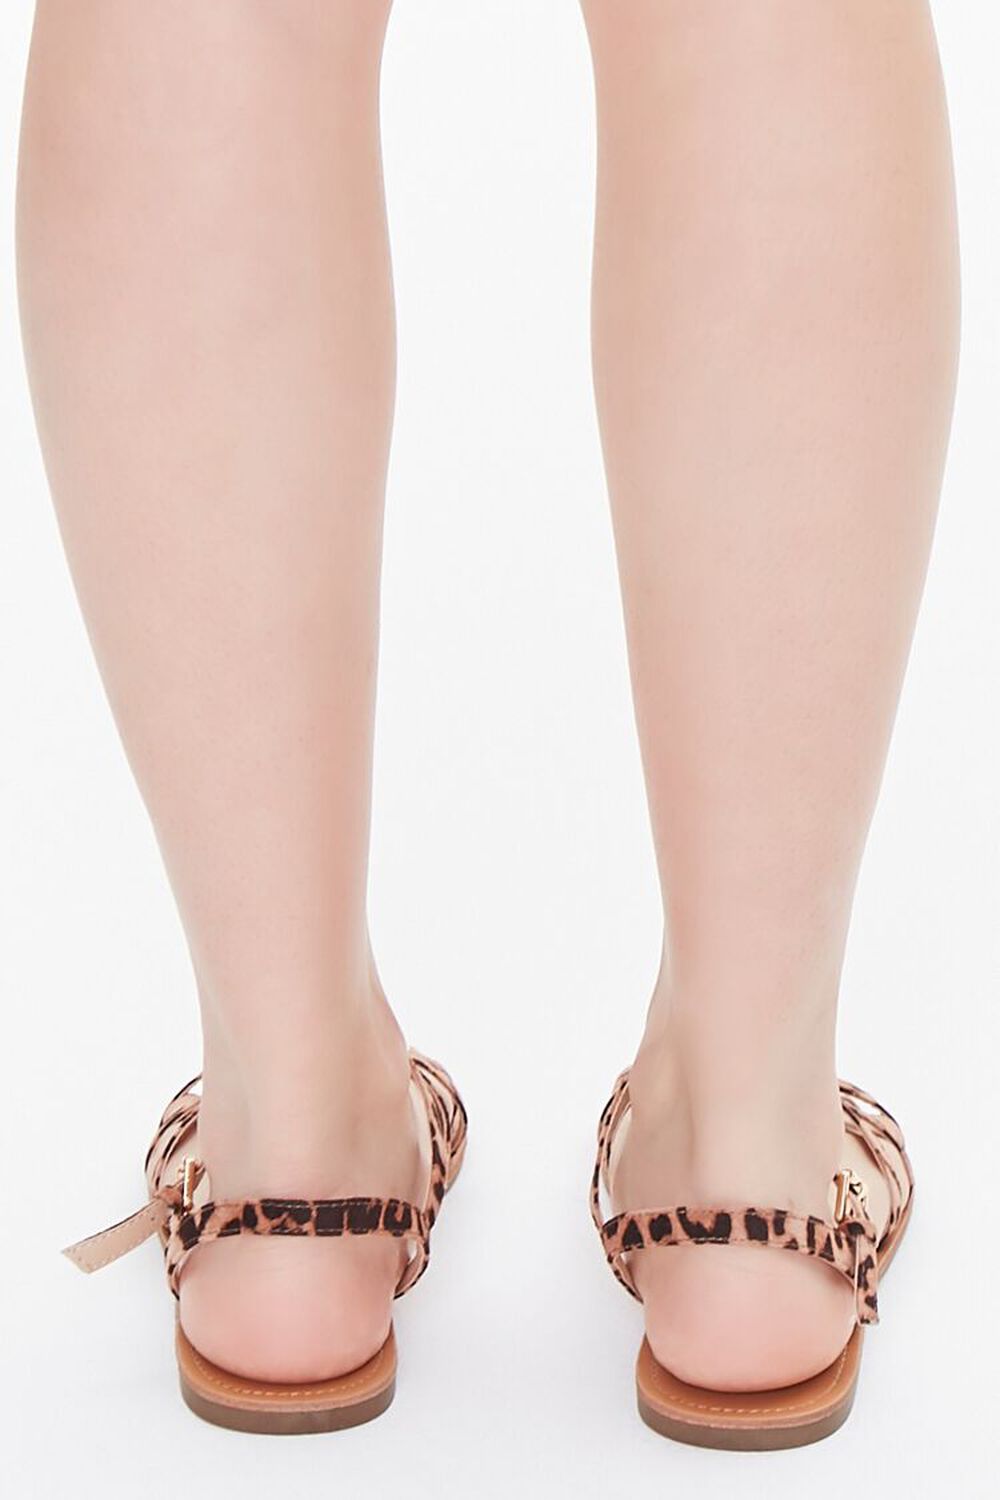 TAN/BLACK Leopard Print Strappy Sandals, image 3